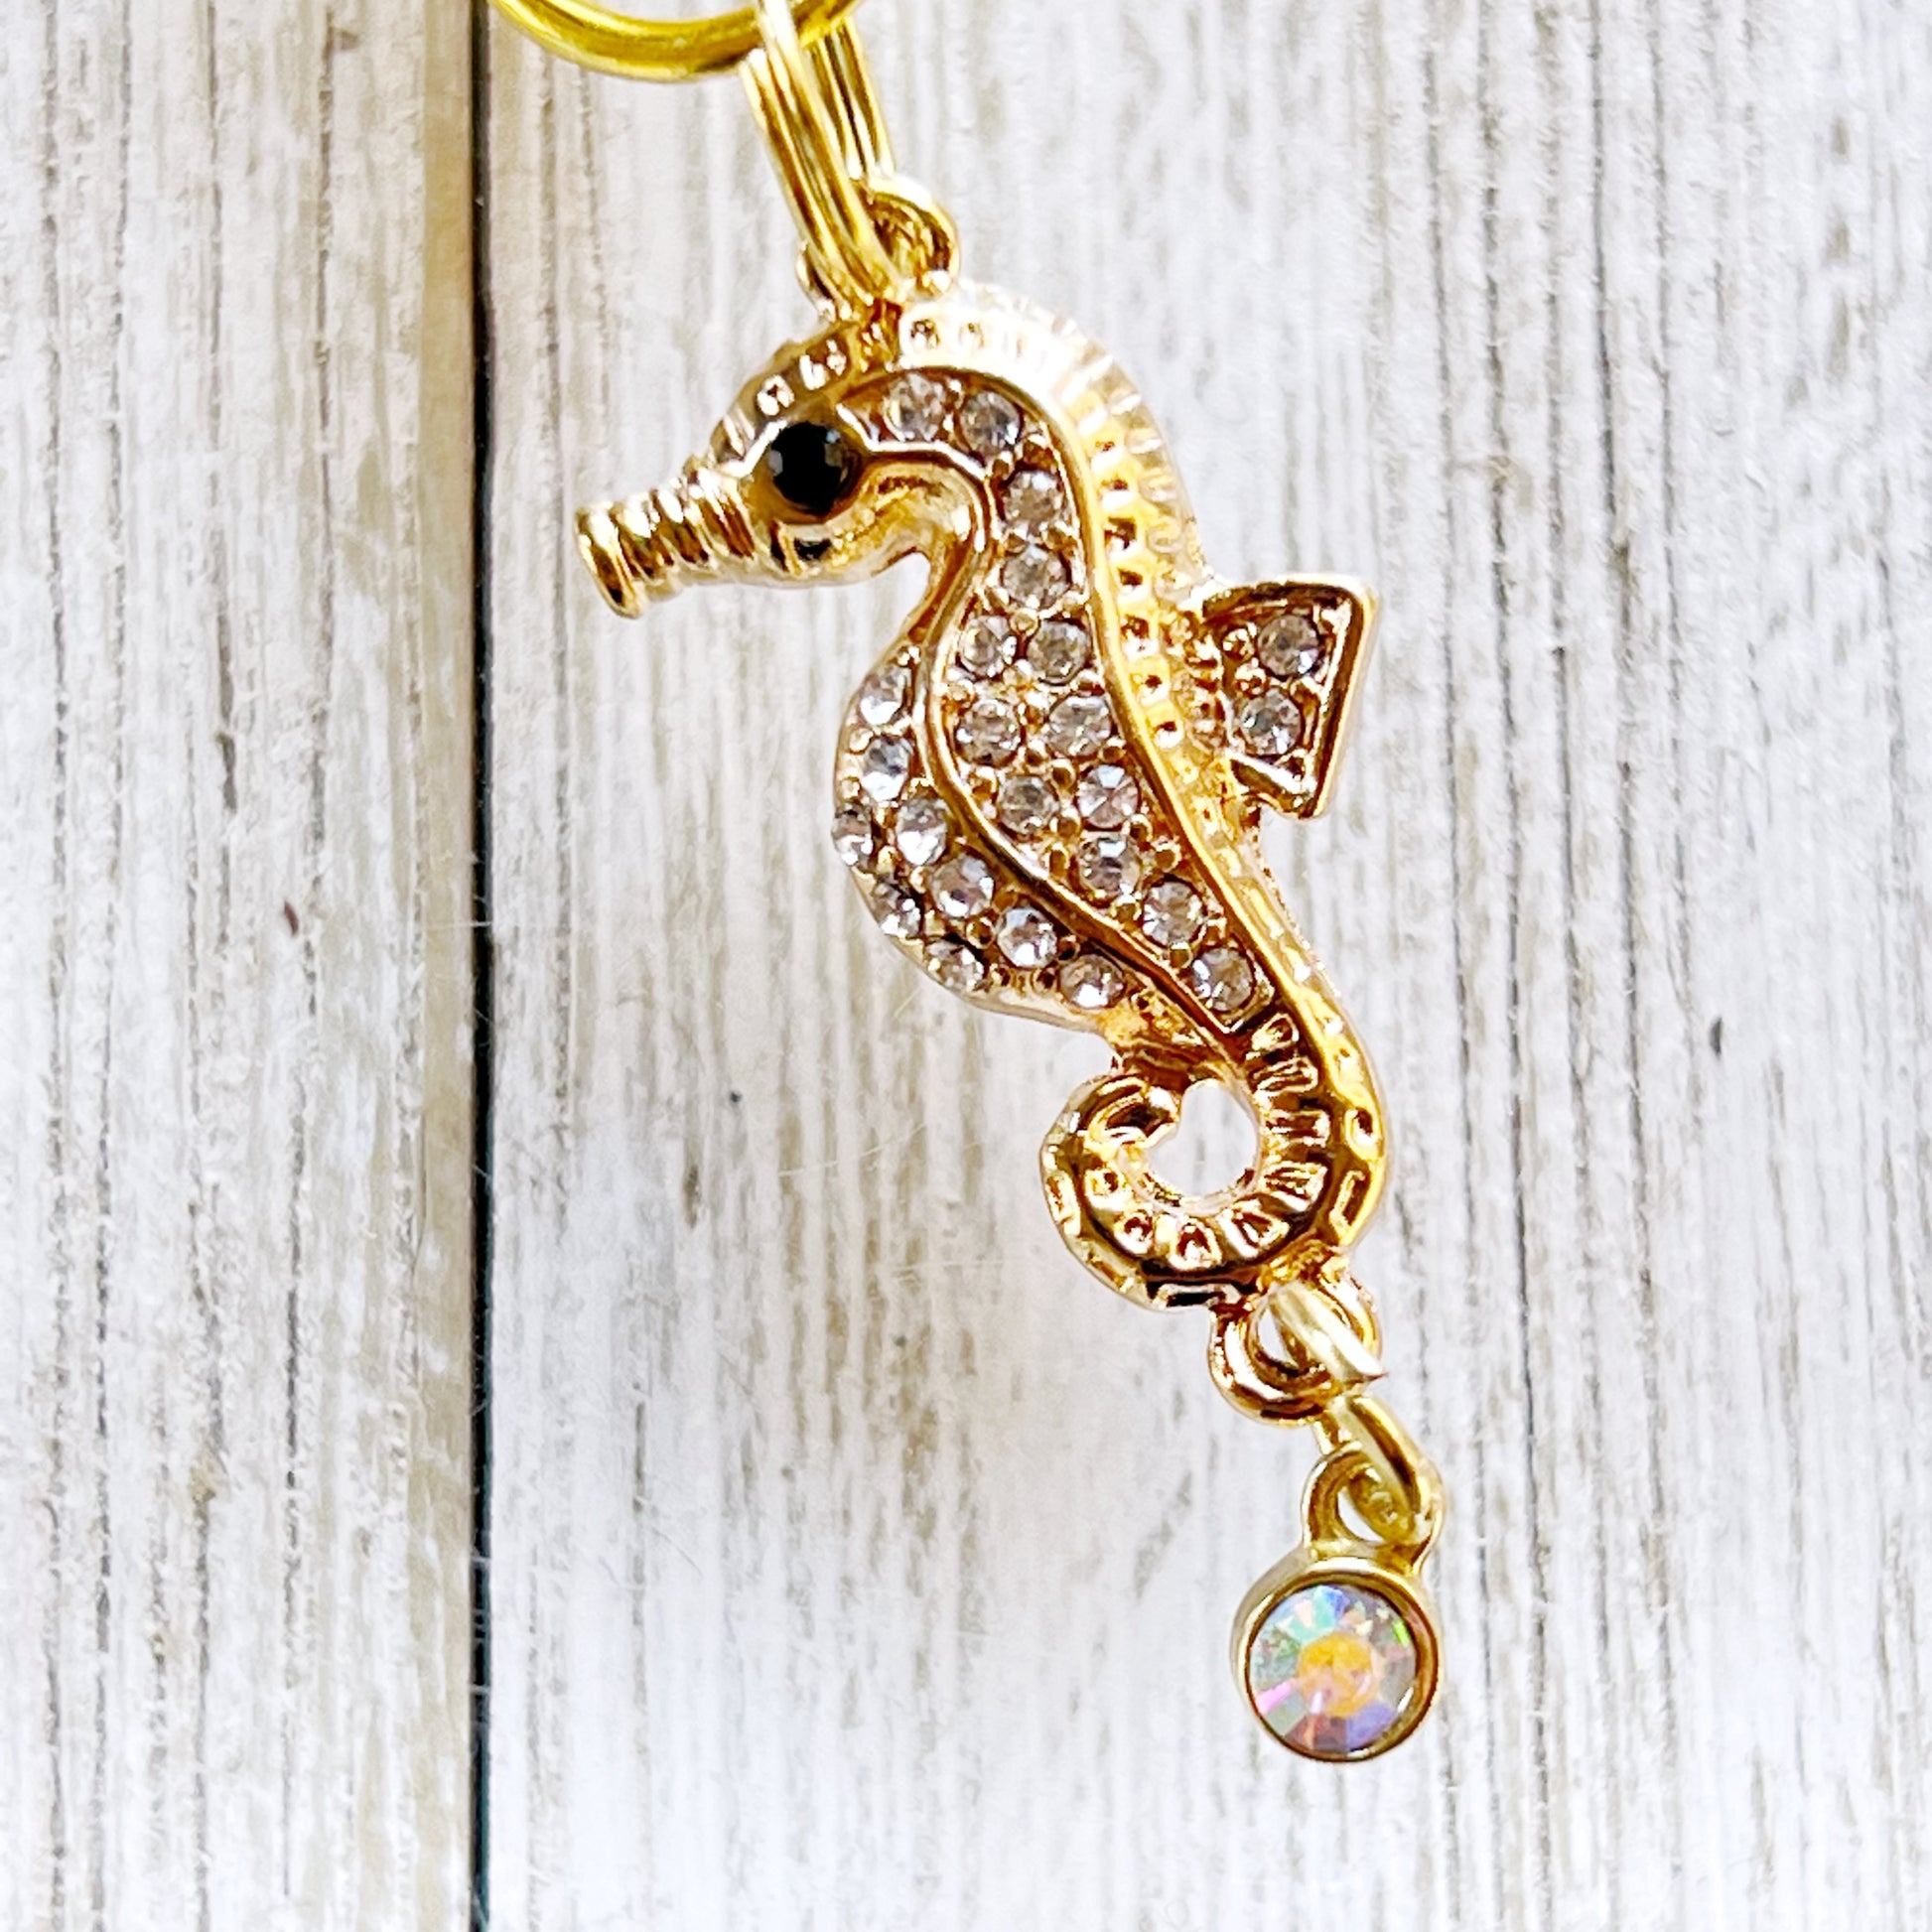 Seahorse Zipper Pull Keychain Purse Charm: Sparkling Rhinestones for Beachy Vibes